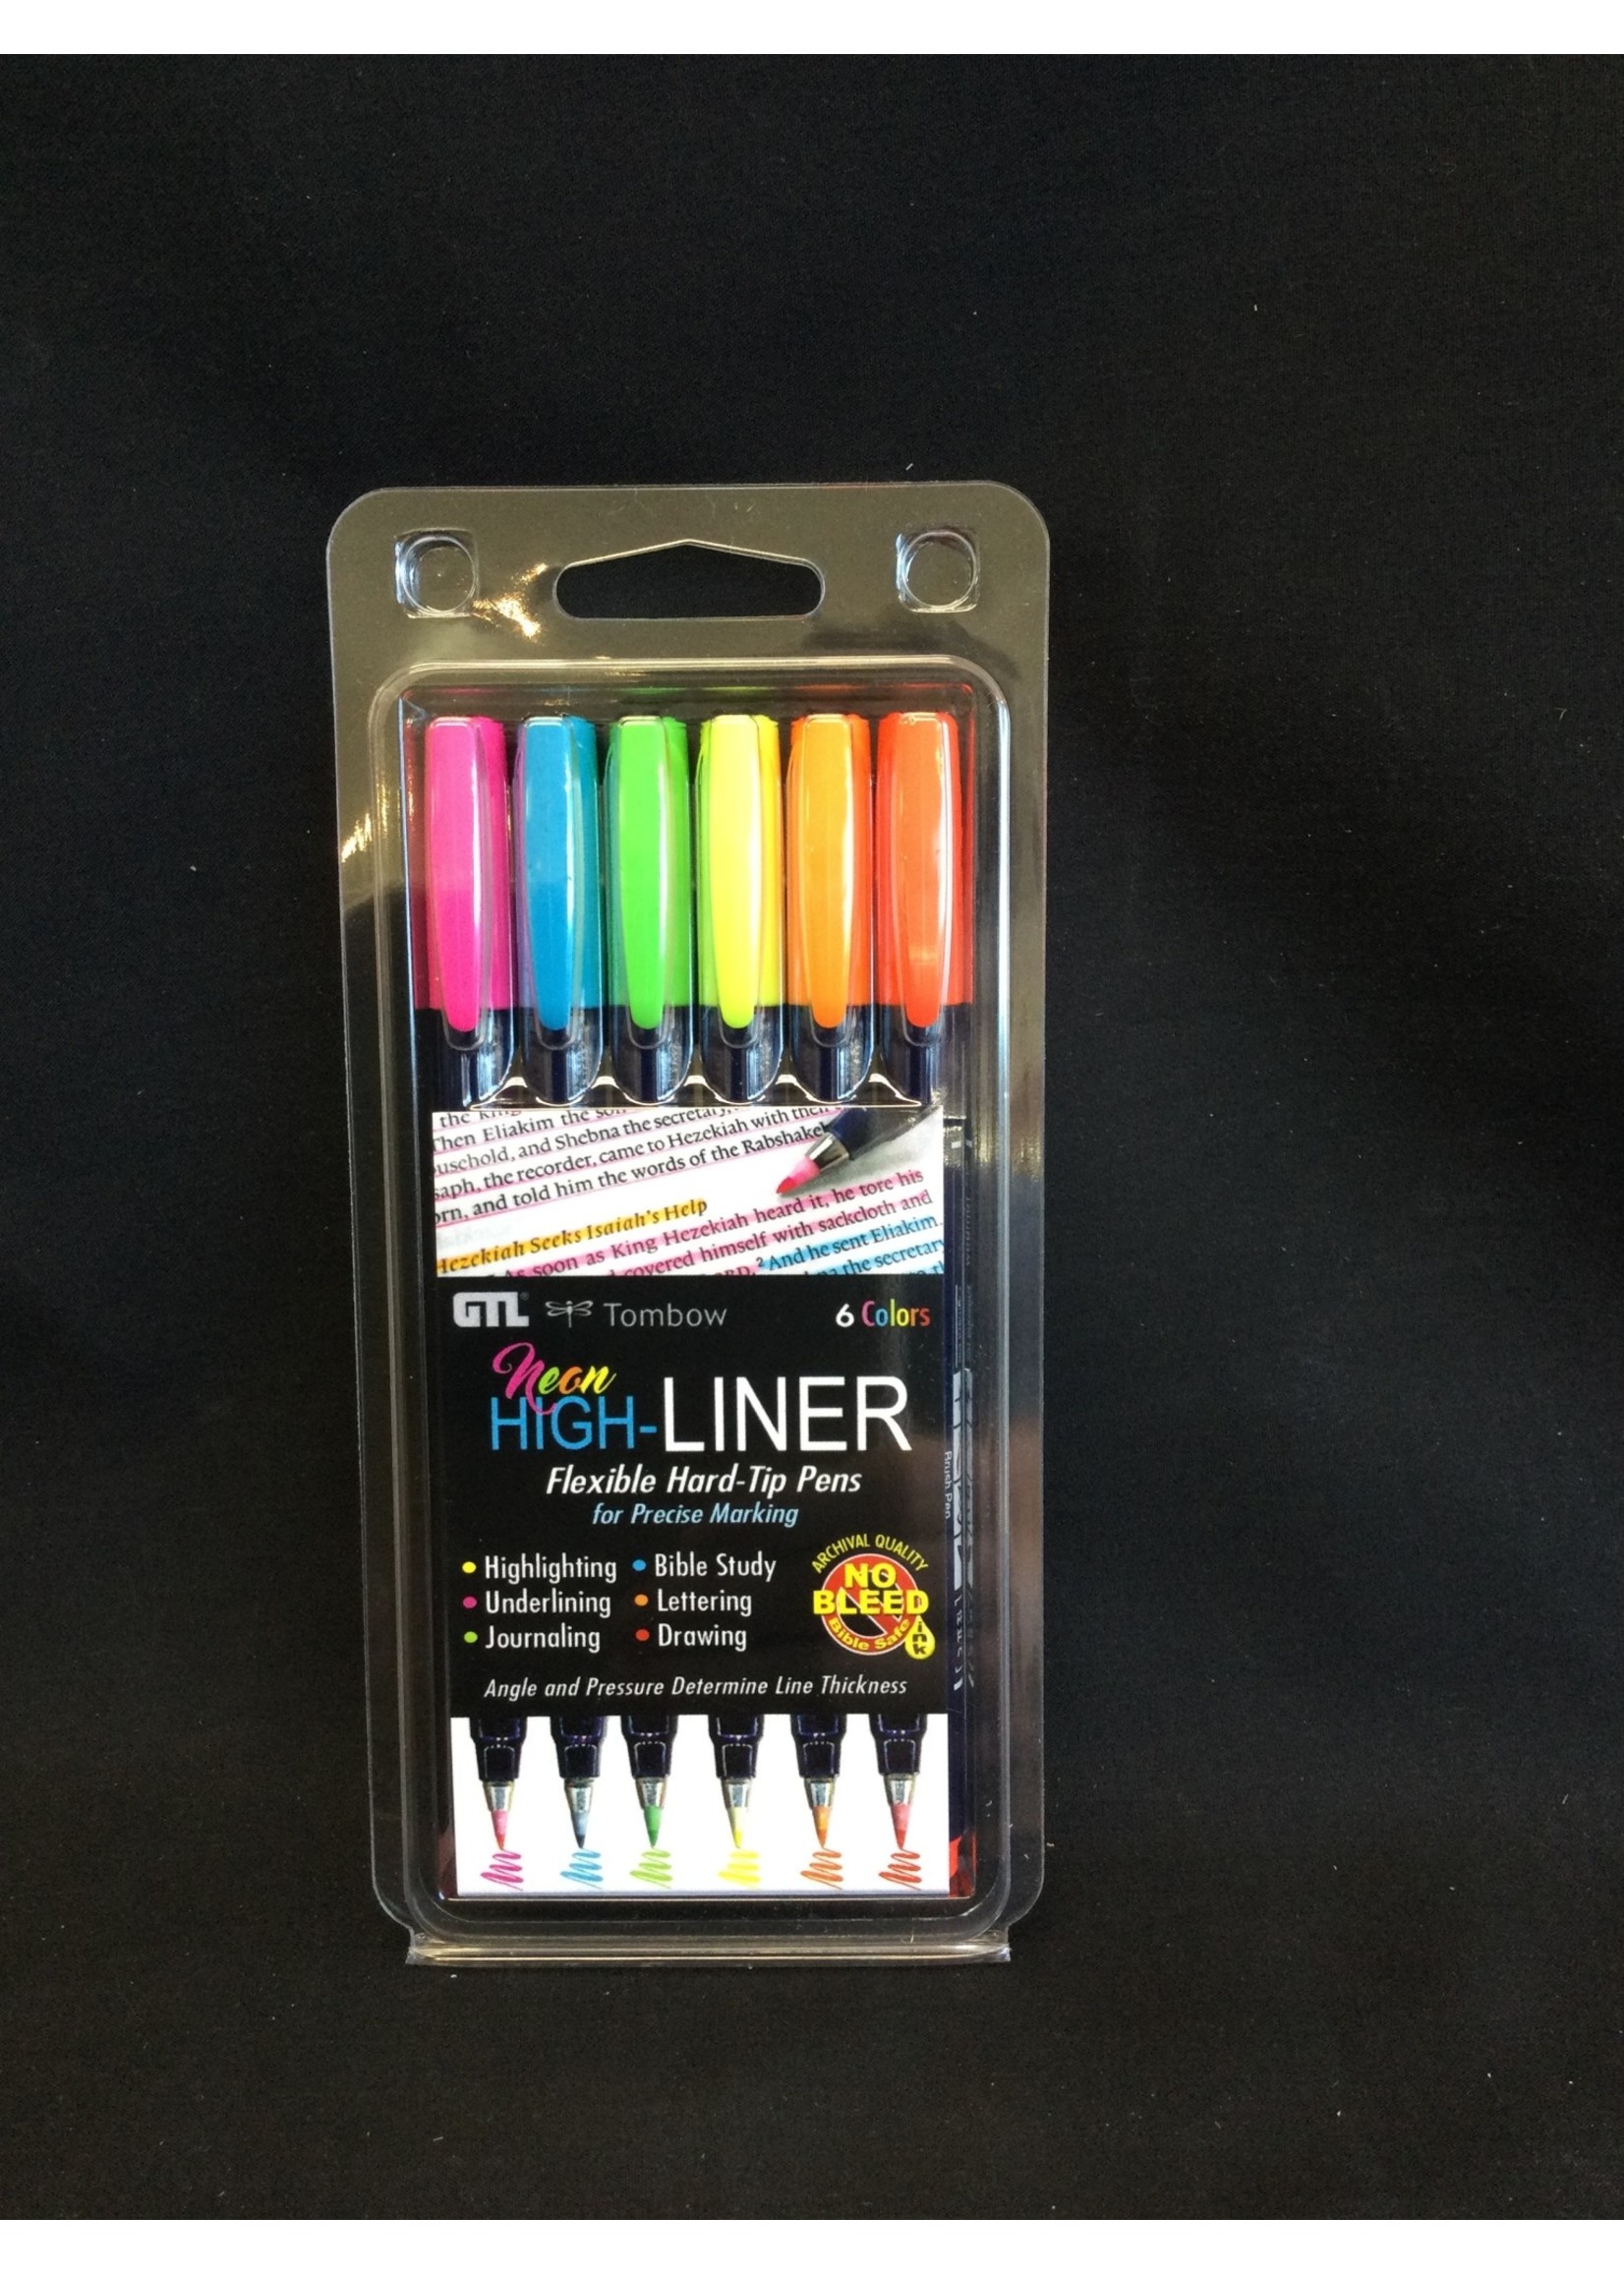 Neon High Liner Flexible Hard Tip Pens